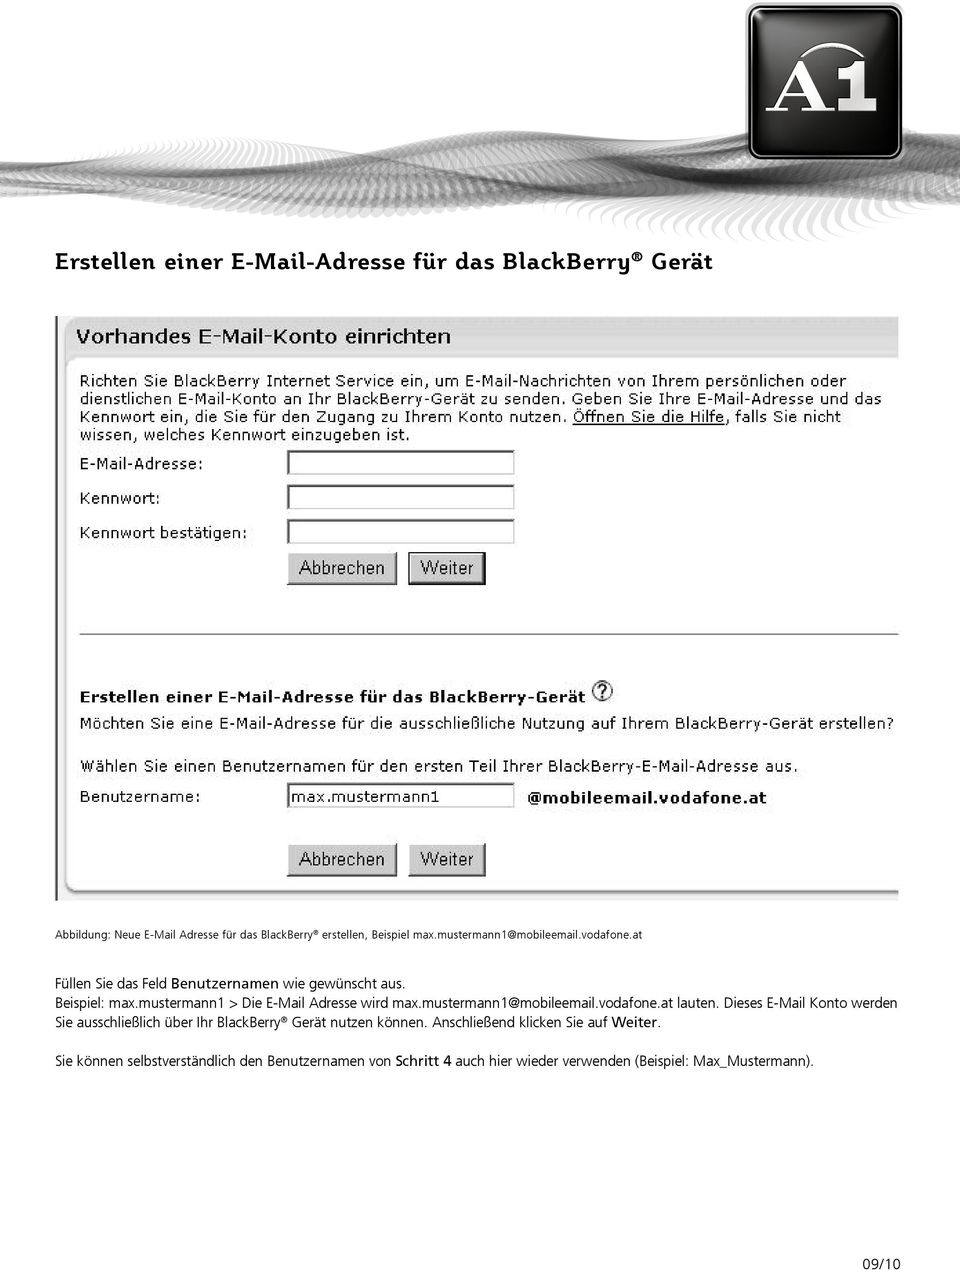 mustermann1 > Die E-Mail Adresse wird max.mustermann1@mobileemail.vodafone.at lauten.